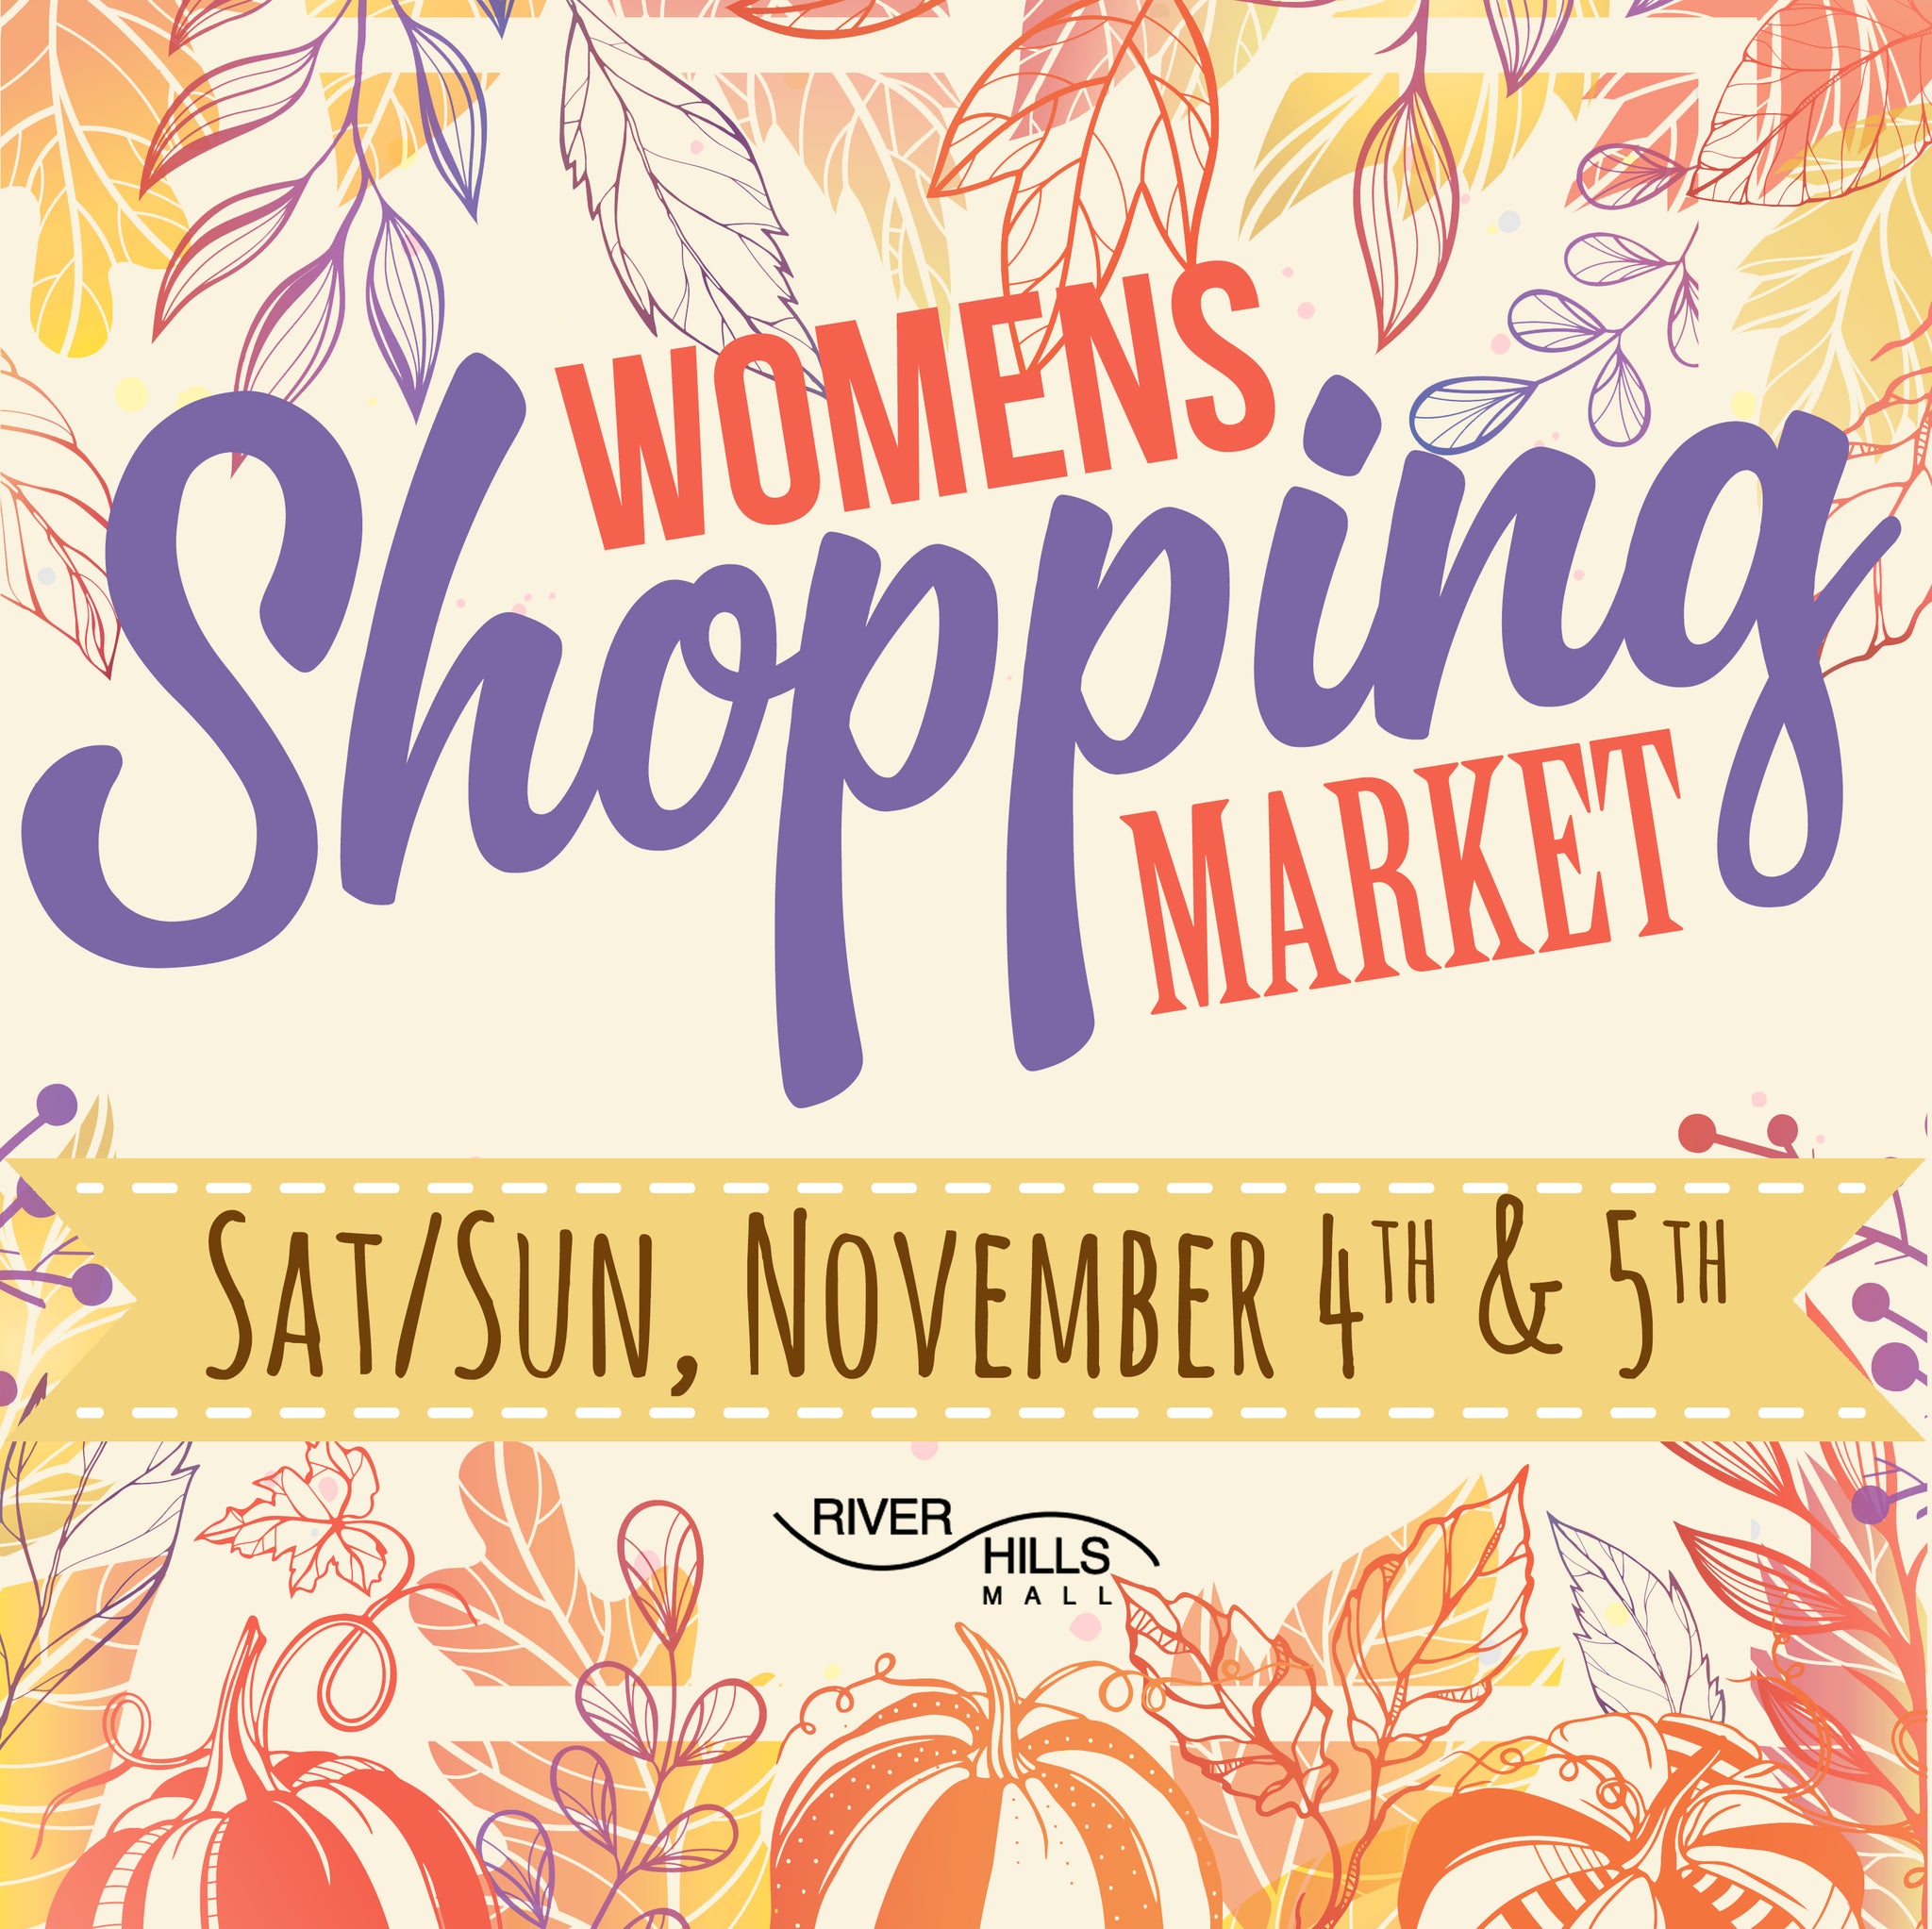 Womens Shopping Market